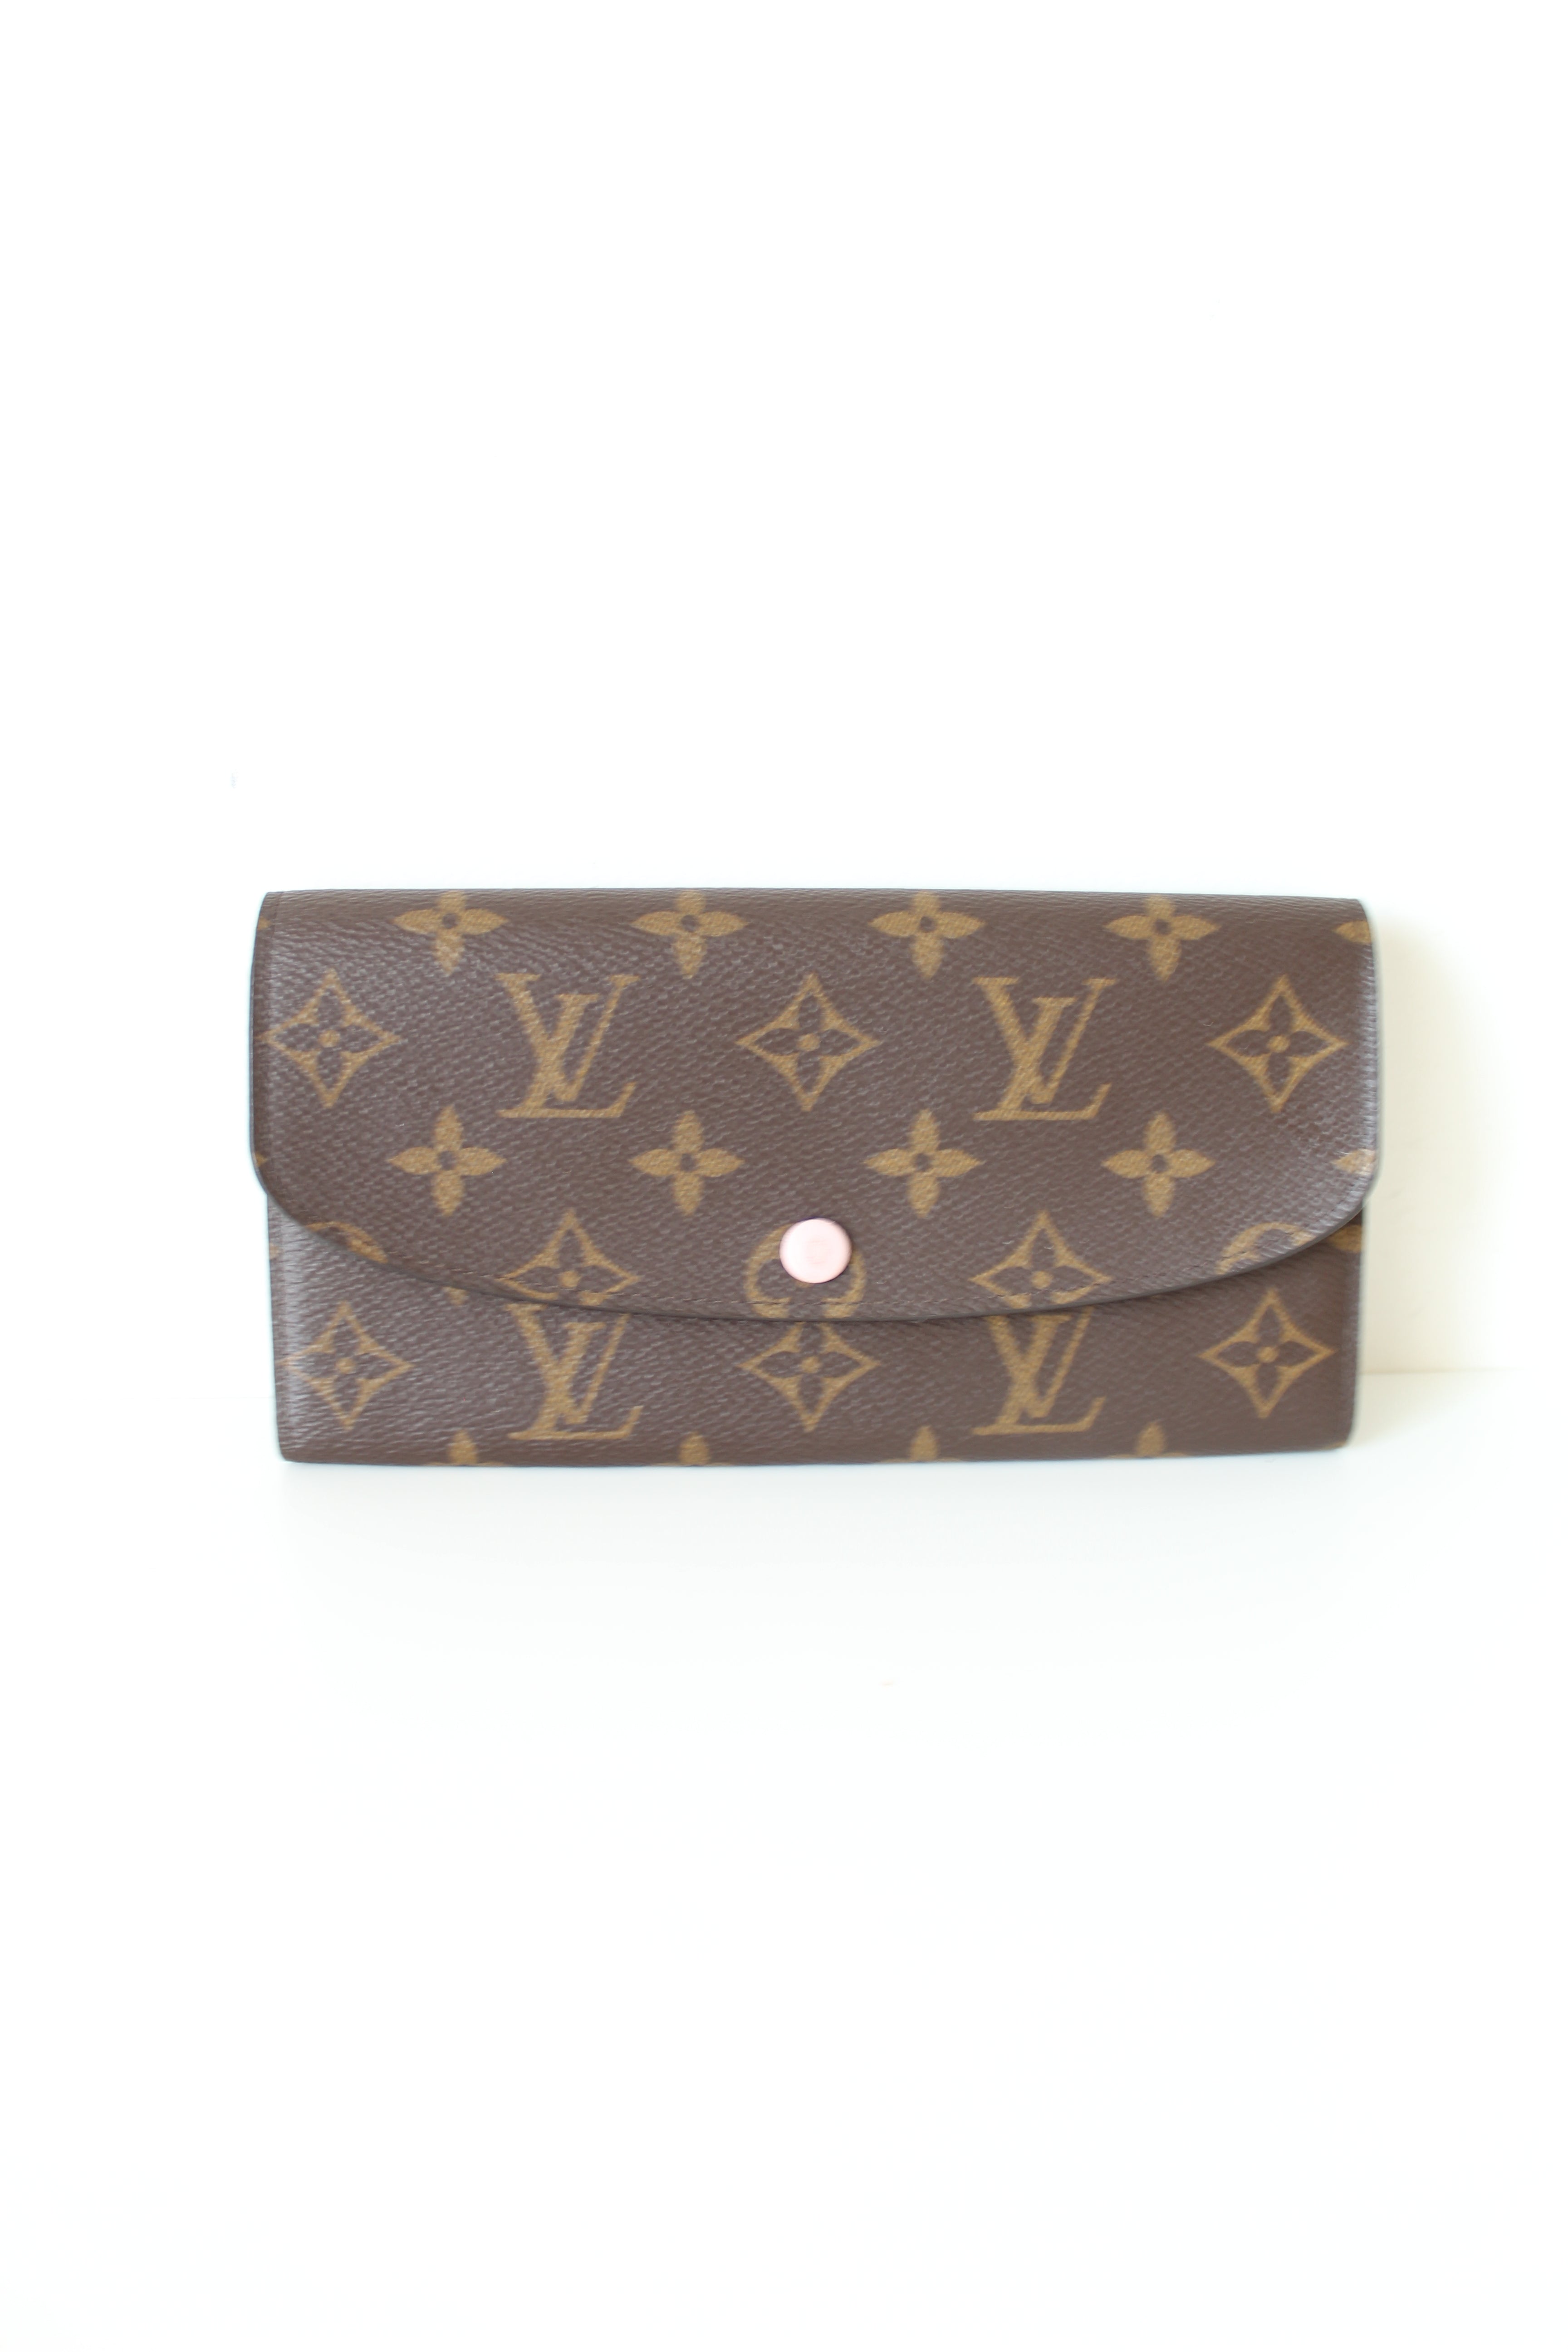 Products by Louis Vuitton: Emilie Wallet  Louis vuitton sarah wallet, Louis  vuitton emilie wallet, Emilie wallet